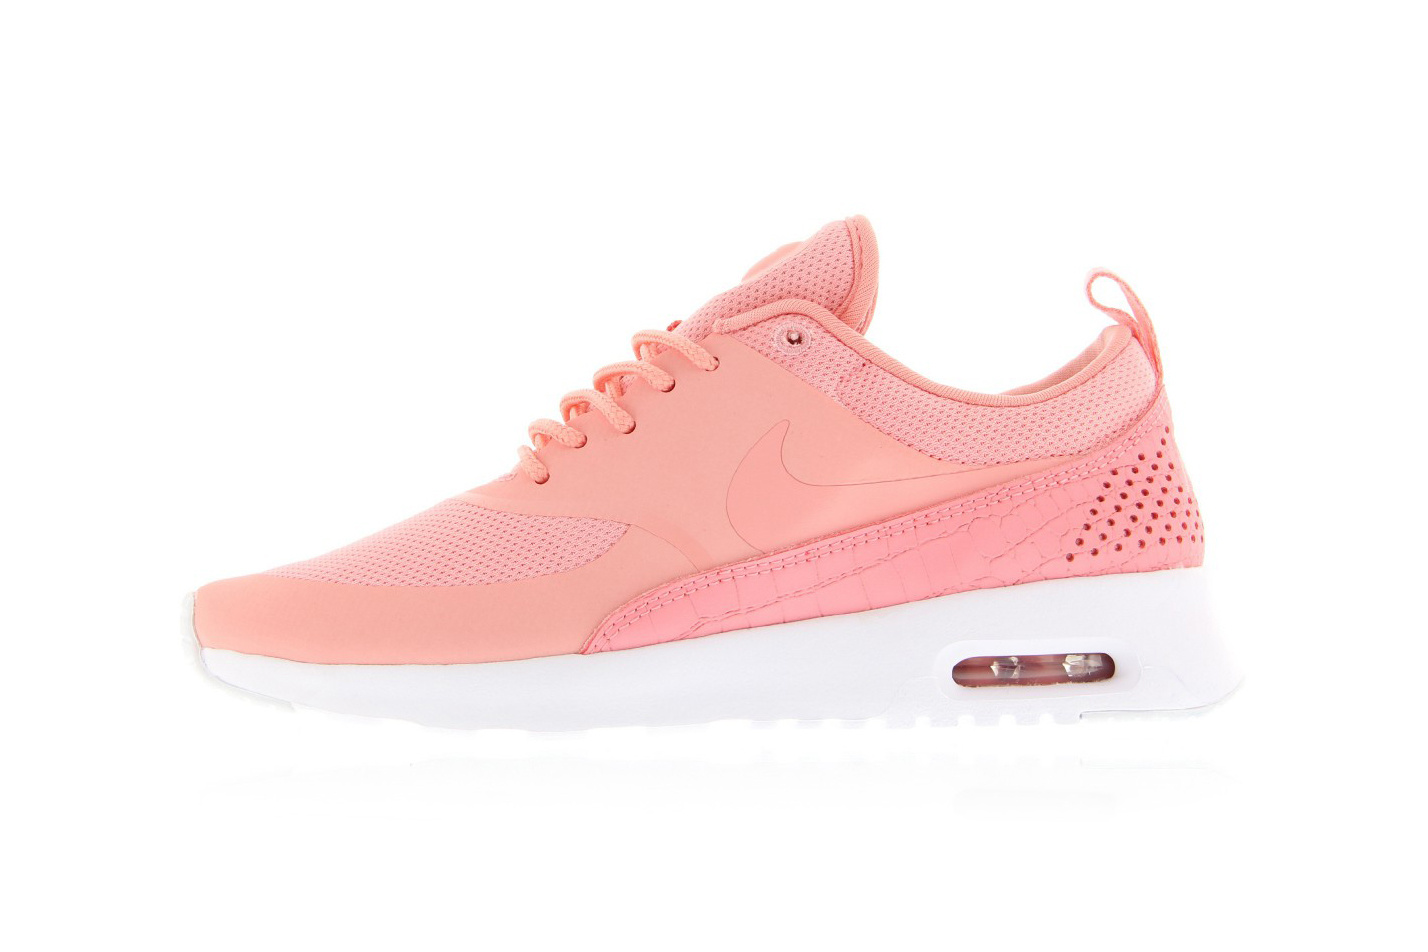 Nike's Air Max Thea "Bright Melon" Is a Sharp Pink Shock